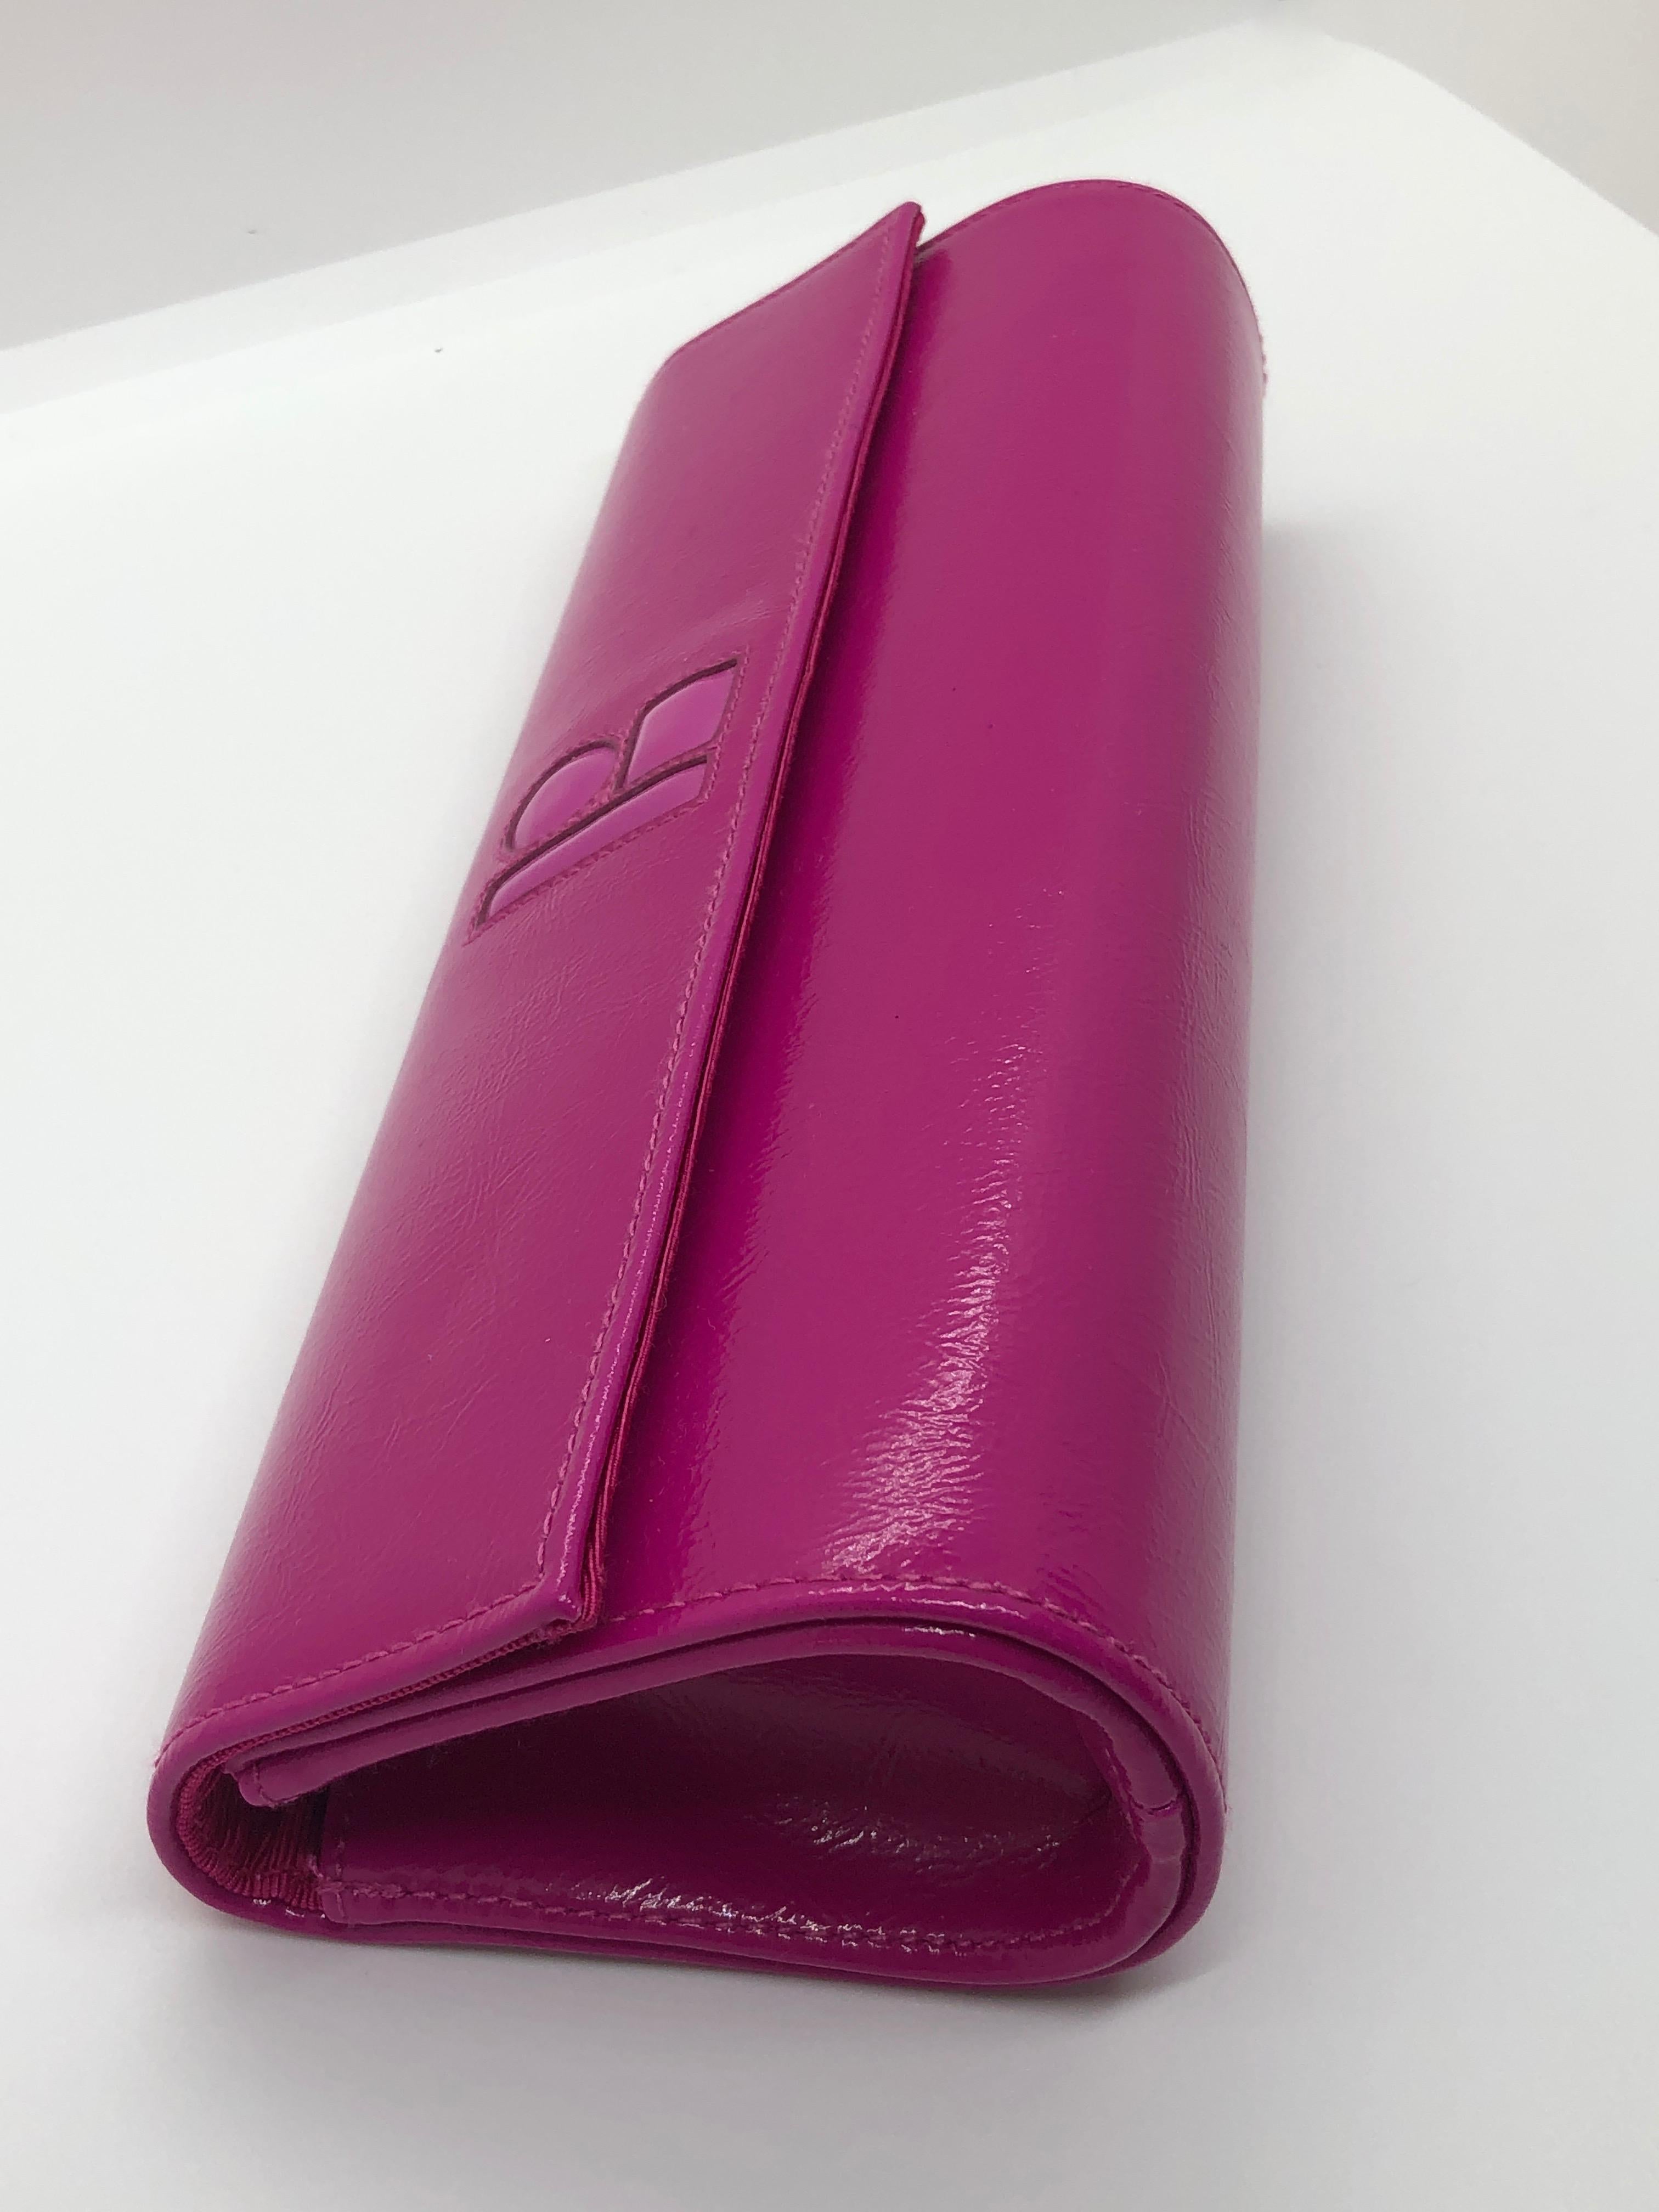 Lisa Perry Mod Fuchsia Pink Patent Leather Clutch Handbag w/ Magnetic Closure  7